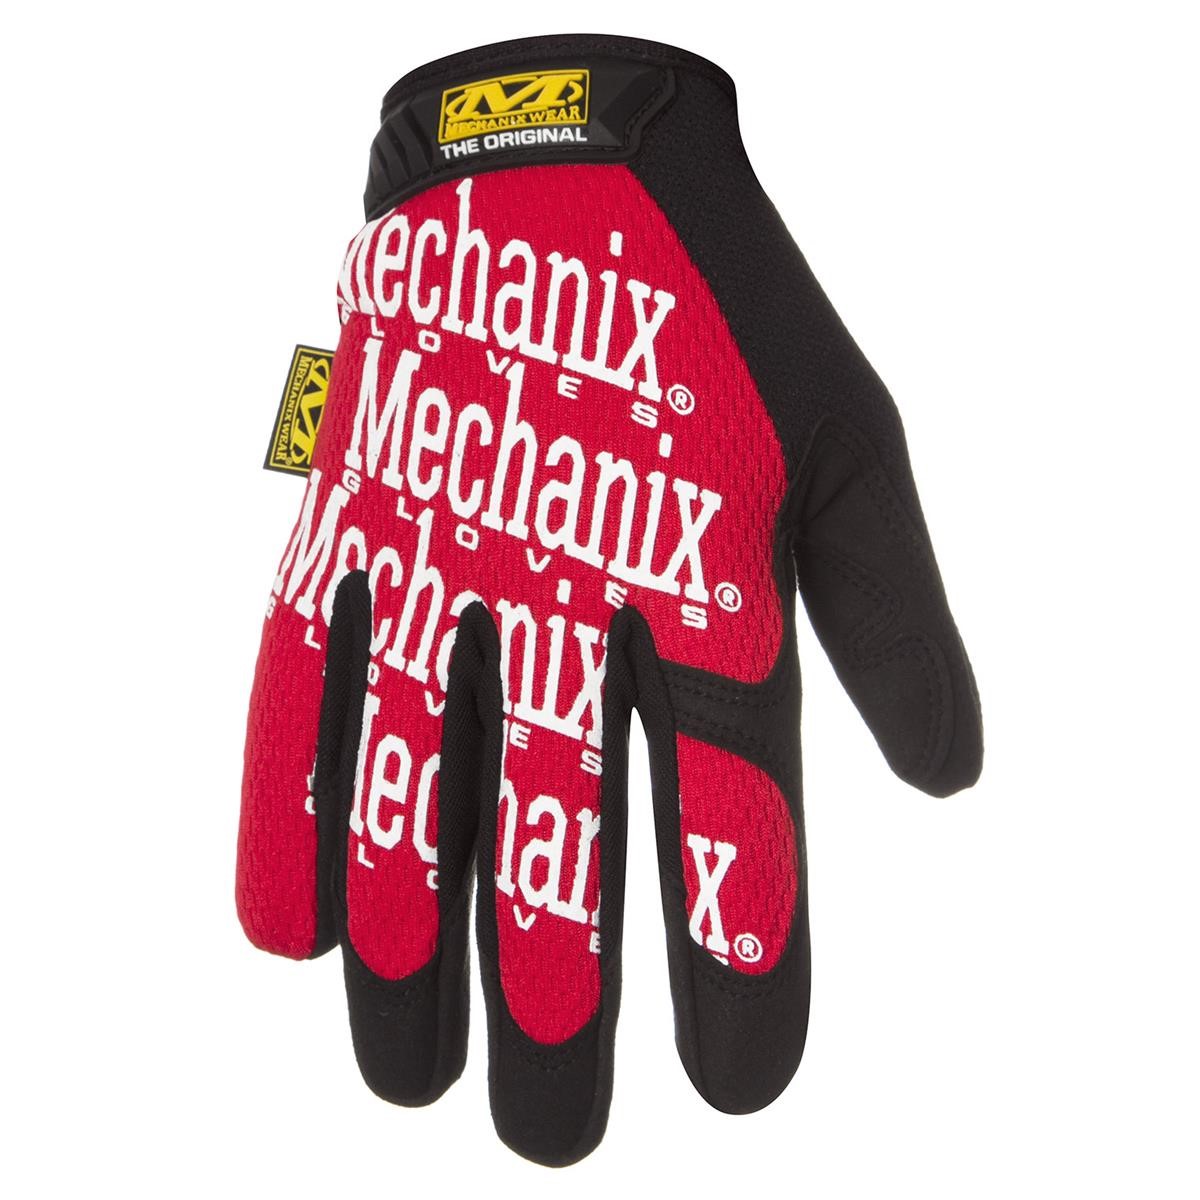 Mechanix Wear Gloves The Original Red/Black